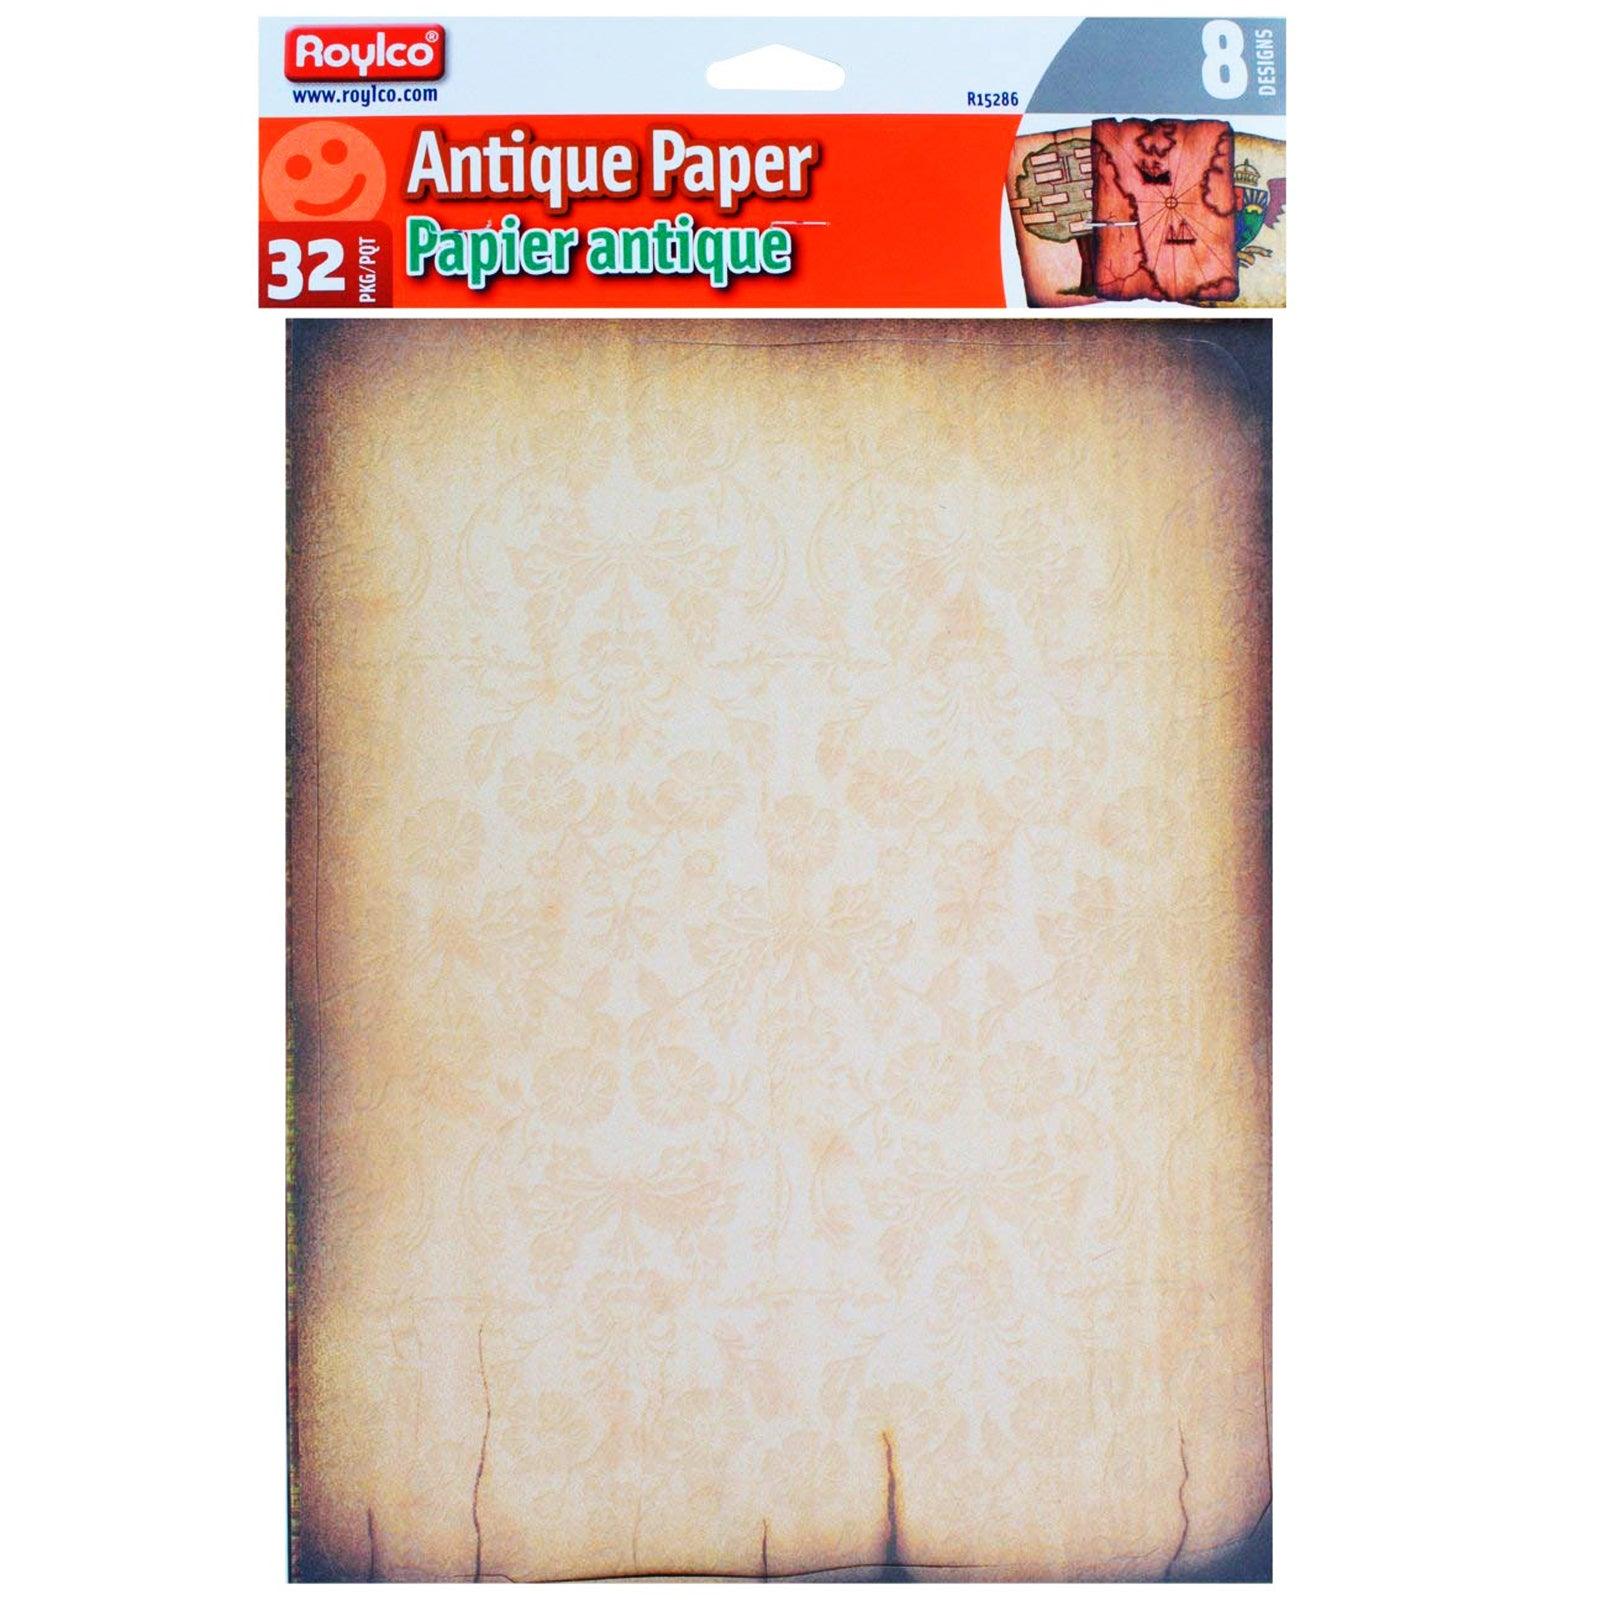 Antique Paper, 8-1/2" x 11", 32 Sheets Per Pack, 2 Packs - Loomini